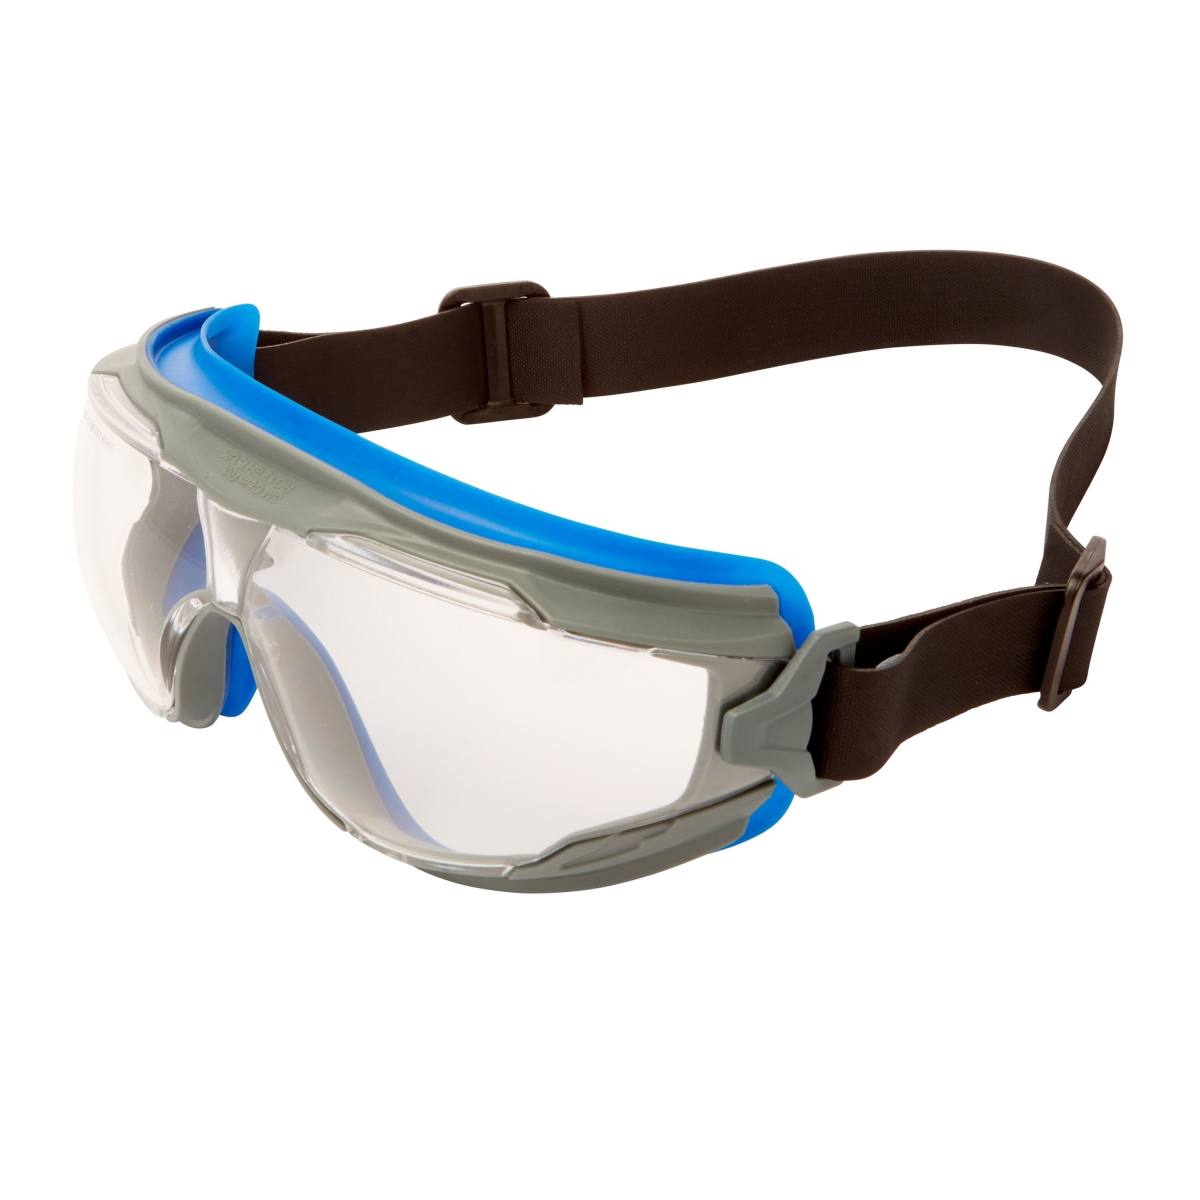 occhiali 3M GoggleGear 500 a visione totale GG501NSGAF-BLU, autoclavabili, montatura grigio-blu, fascia in neoprene nero, lenti chiare